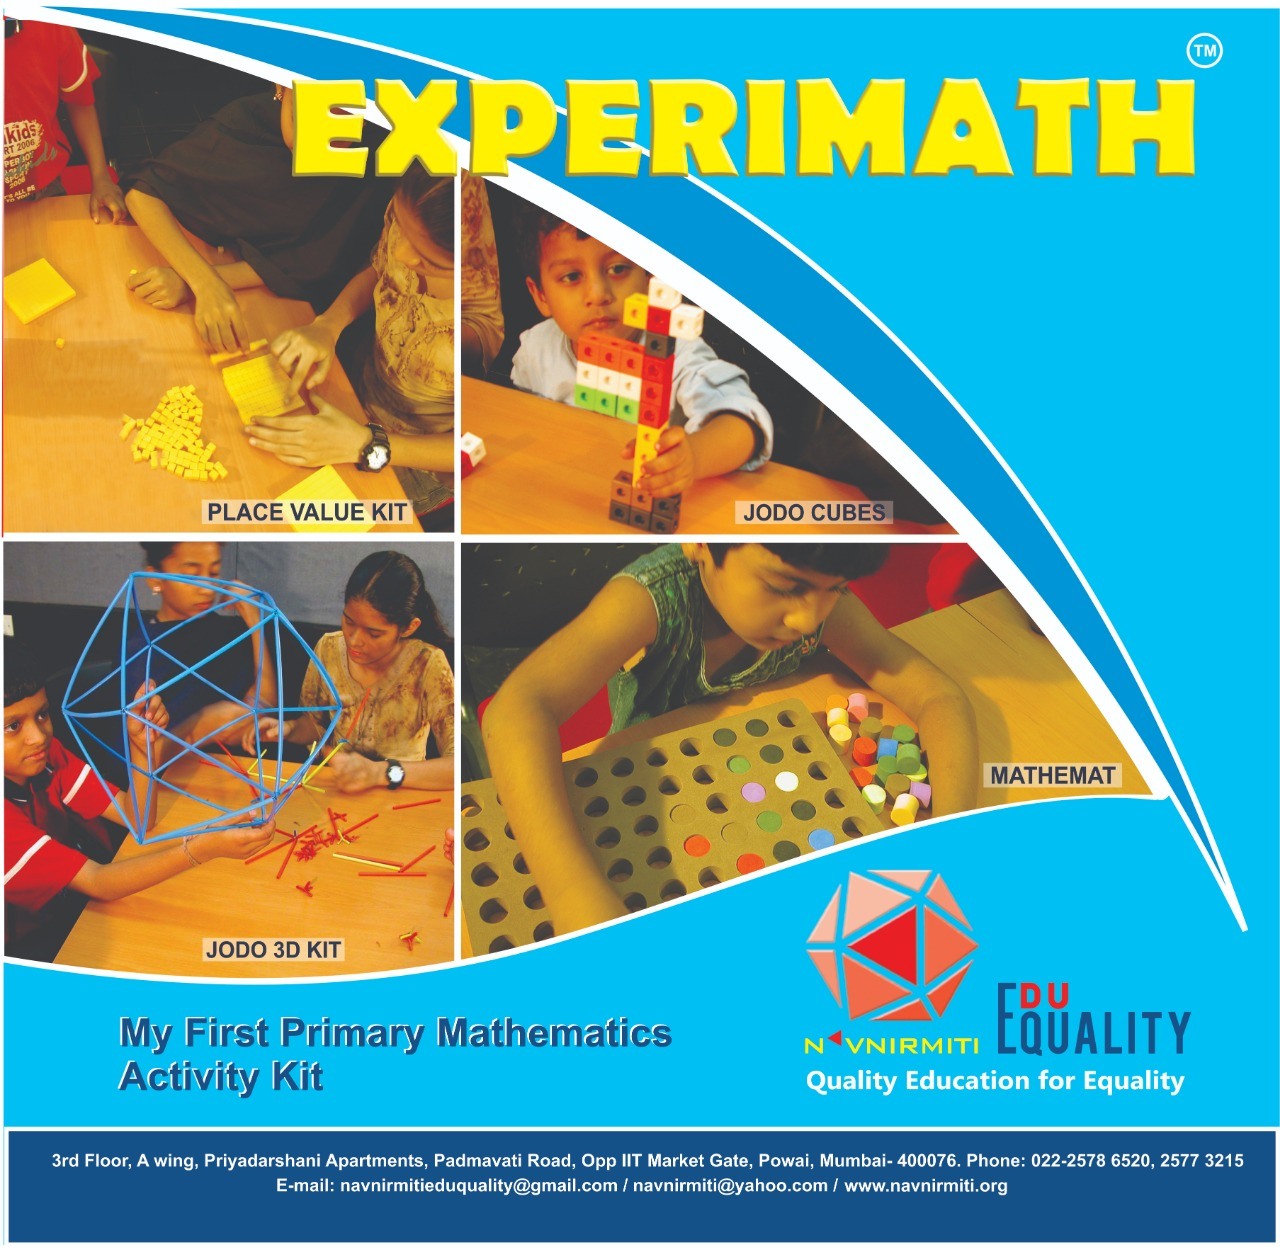 Teacher's Experimath Kit, Powerhouse of Learning Skills, Math Toys, Science Toys, Building Blocks. 